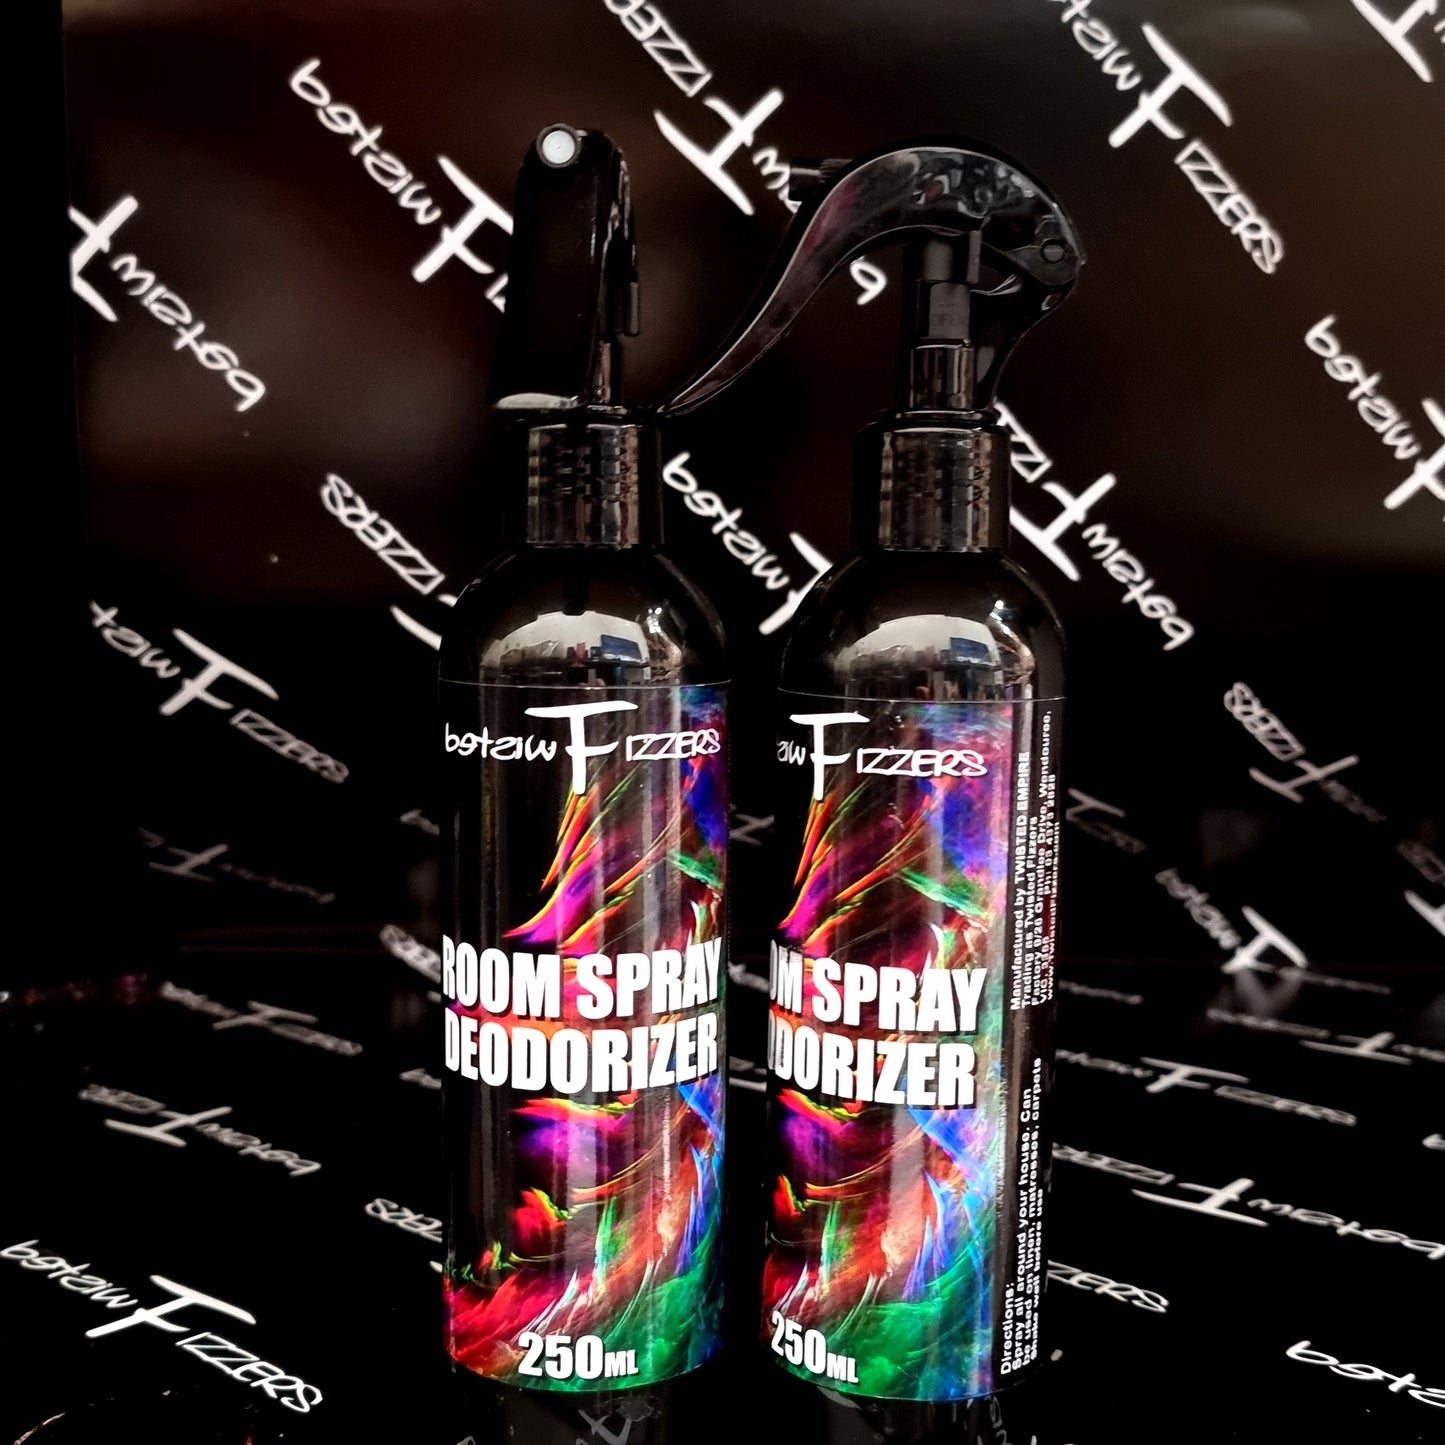 Room Spray Deodoriser - 250ml Spray Bottle